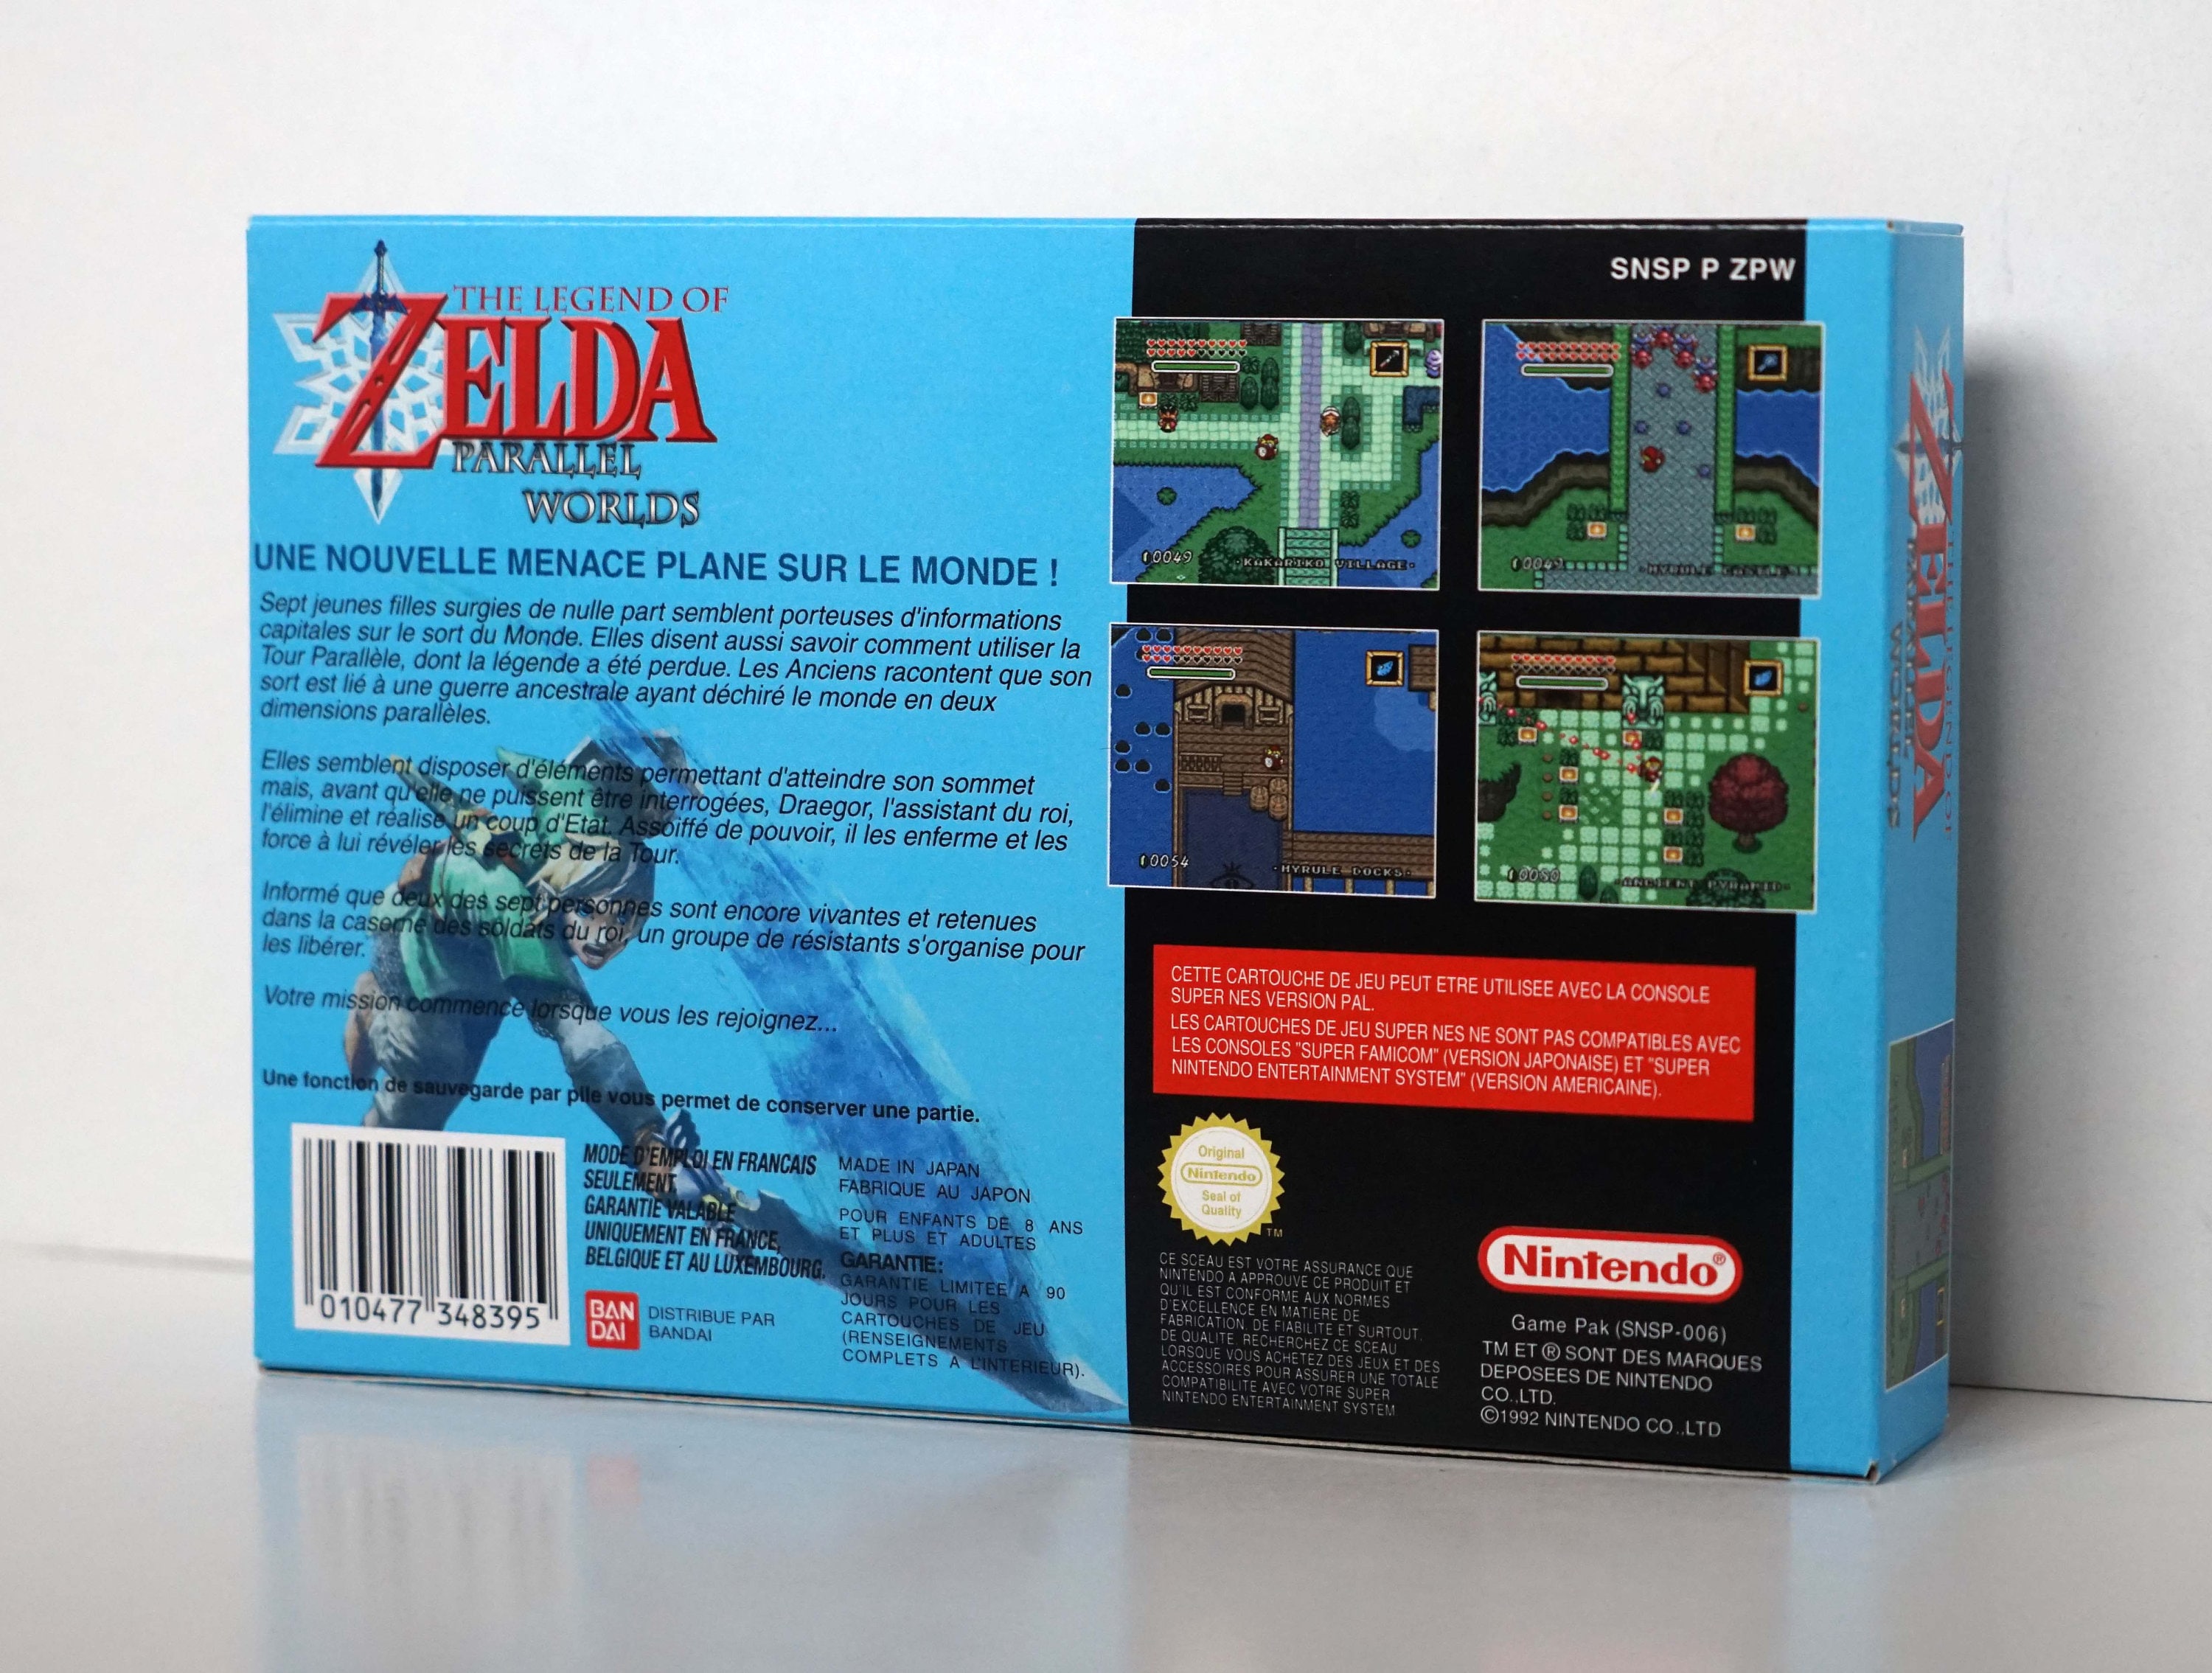 The Legend of Zelda Parallel Worlds Super Nintendo SNES Video -   Singapore